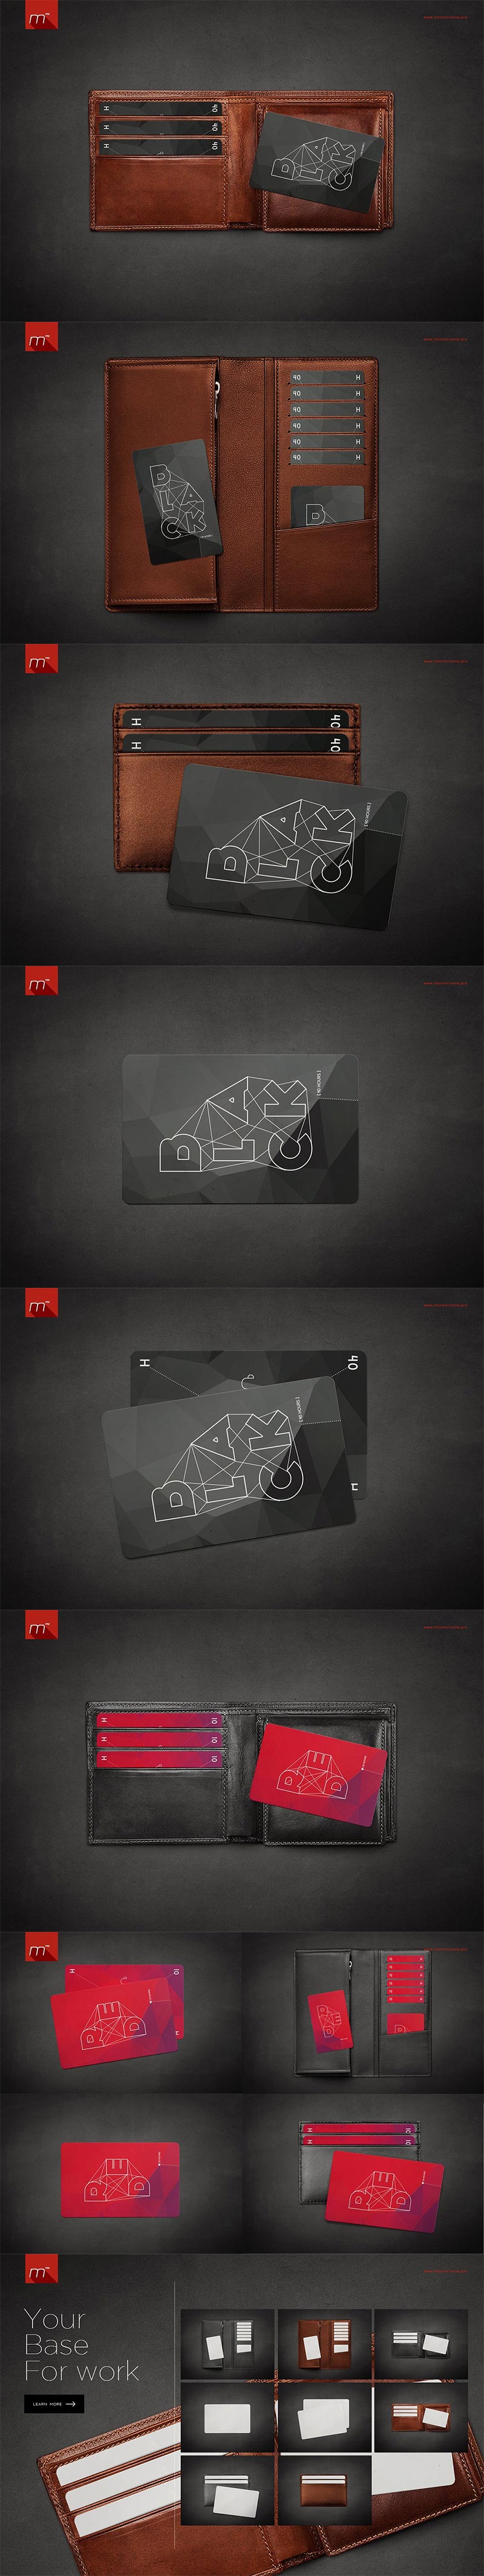 Cards in Wallet Mockup